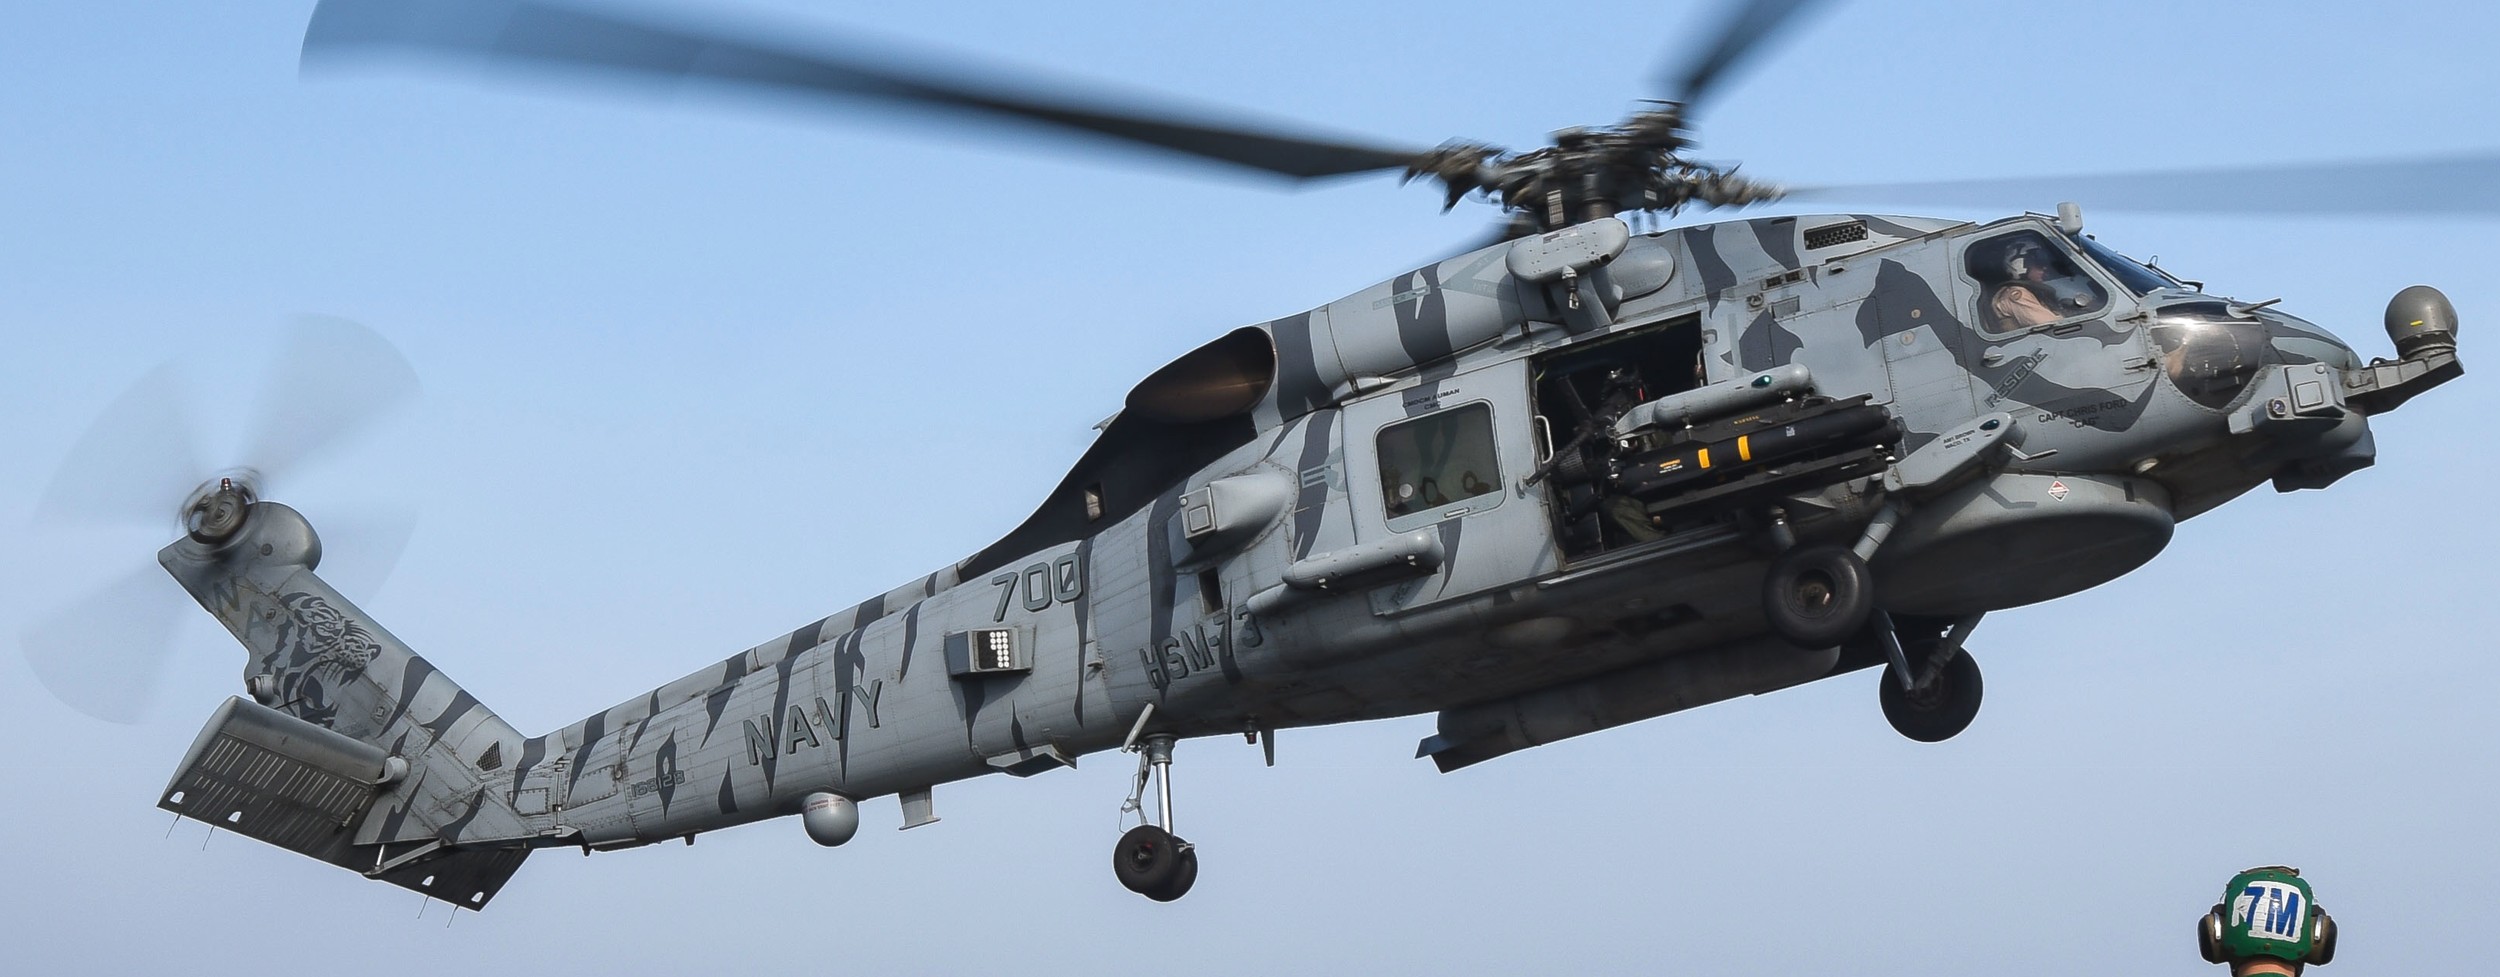 hsm-73 battlecats helicopter maritime strike squadron mh-60r seahawk cvw-17 cvn-71 uss theodore roosevelt 16